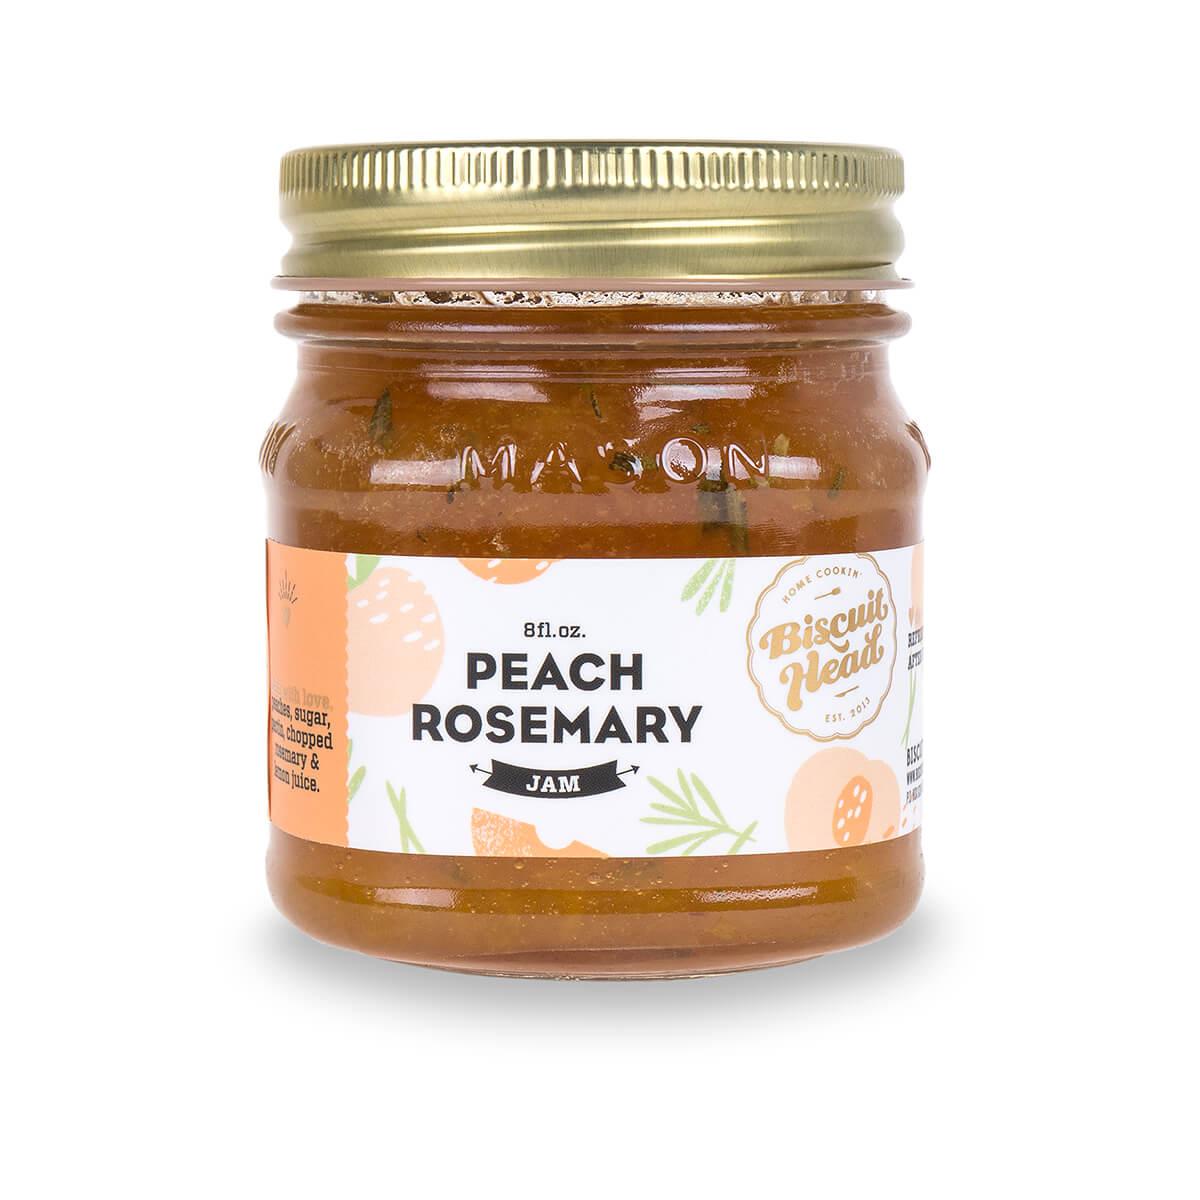  Peach Rosemary Jam